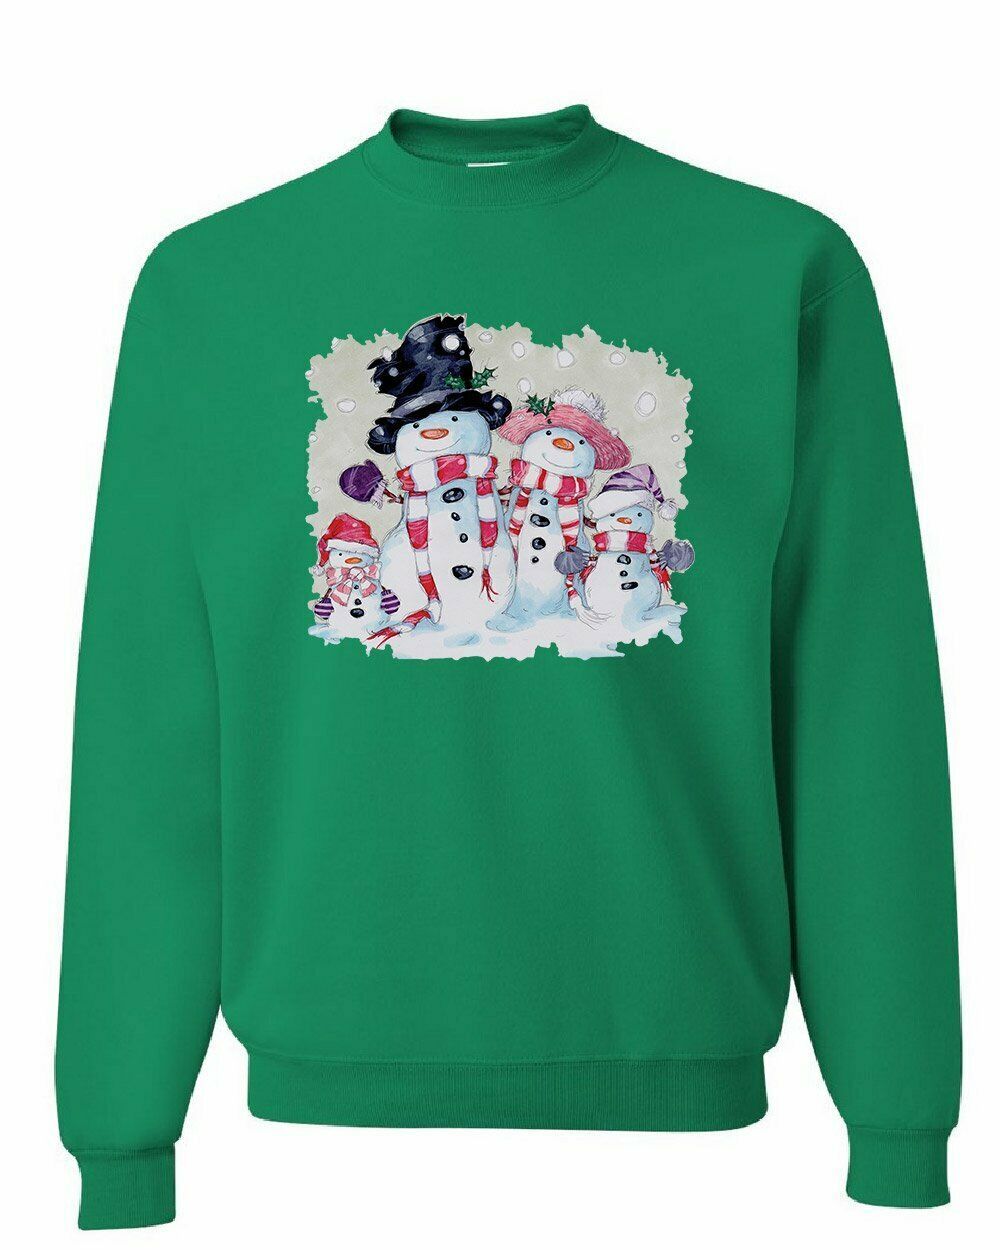 Snowman Family Ugly Christmas Sweatshirt Style: Sweatshirt, Color: Green